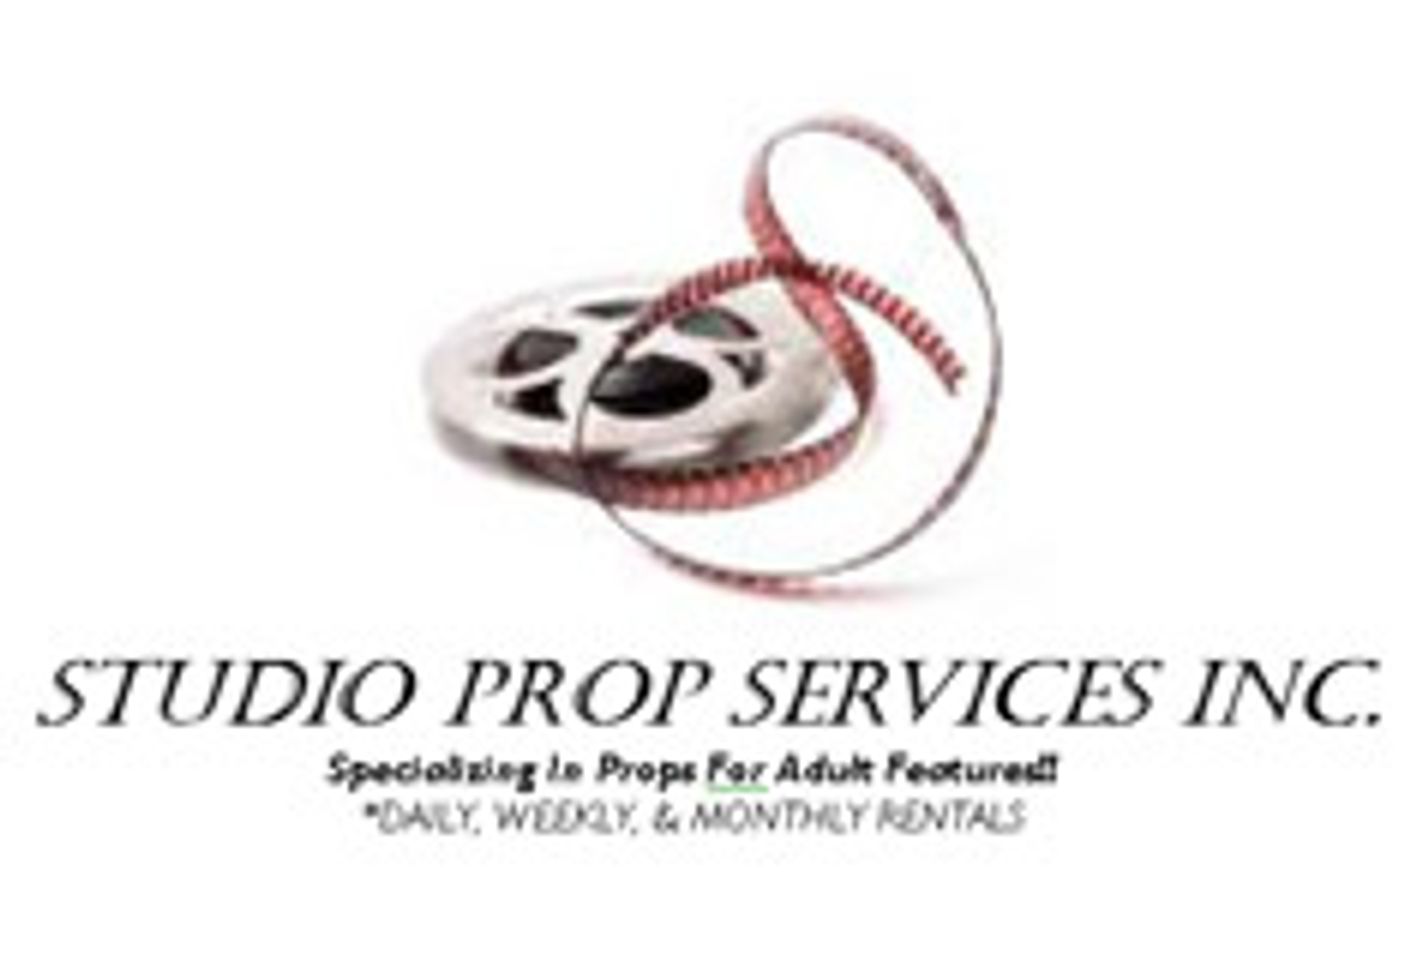 Studio Prop Services Now Serving Adult